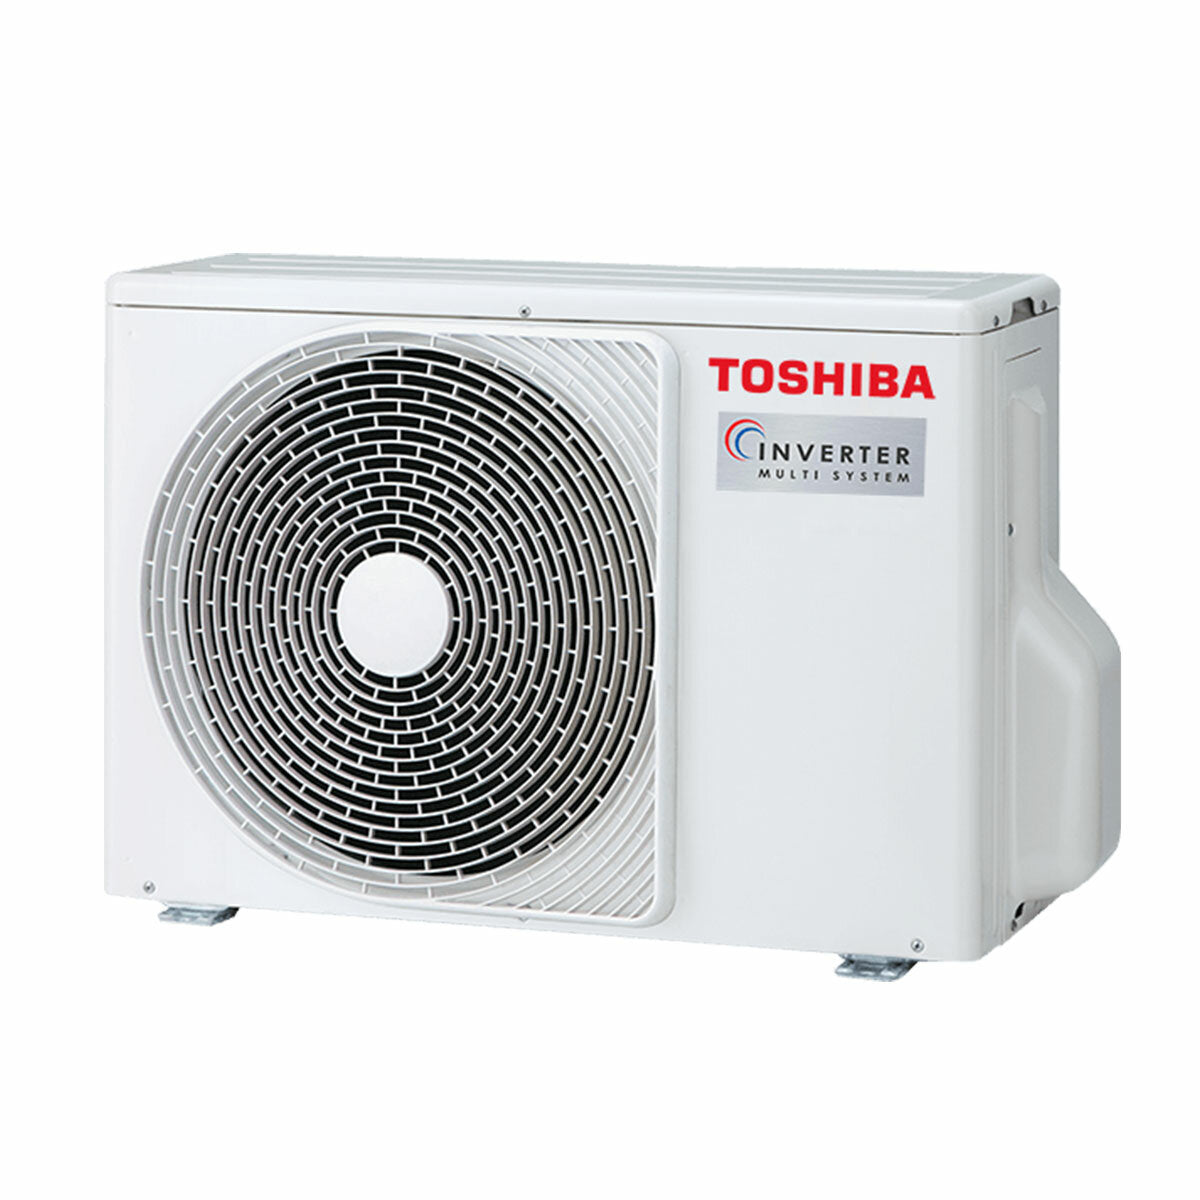 Toshiba Console J2 trial split air conditioner 9000+9000+9000 BTU inverter A+++ external unit 5.2 kW